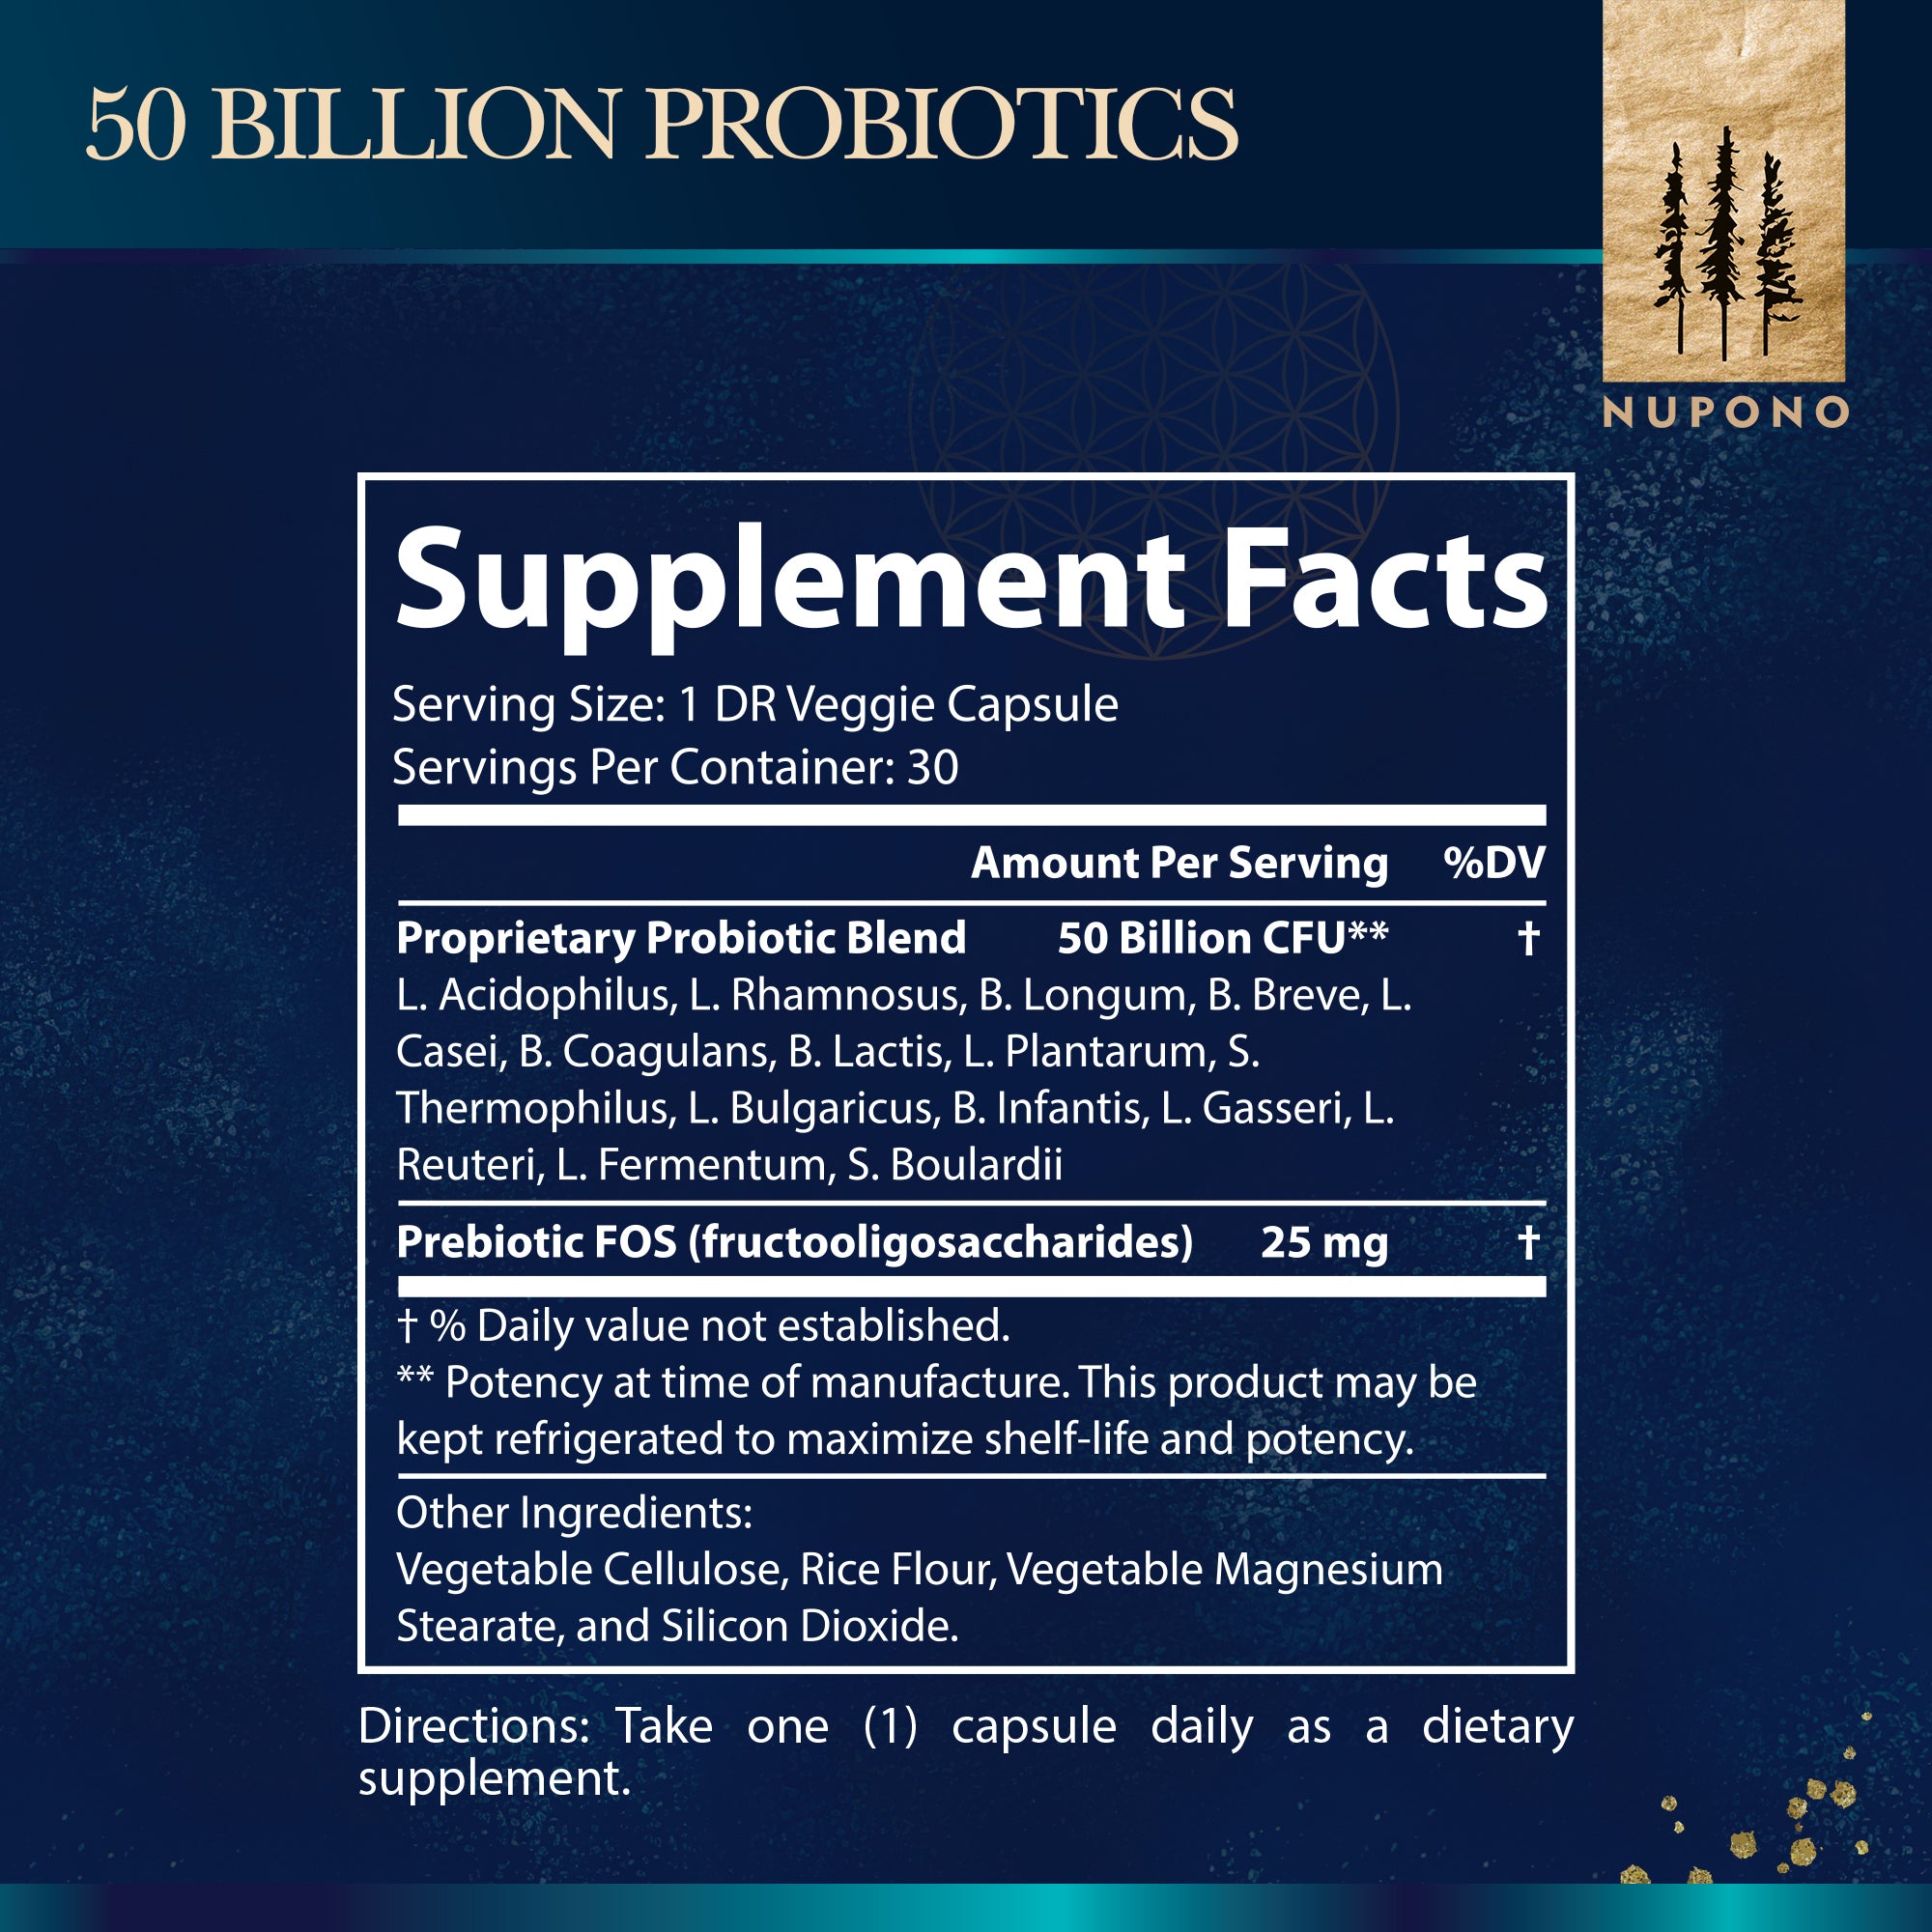 15 Strains 50 billion CFU Probiotic- Healthy Microbiome & Natural Digestive Function